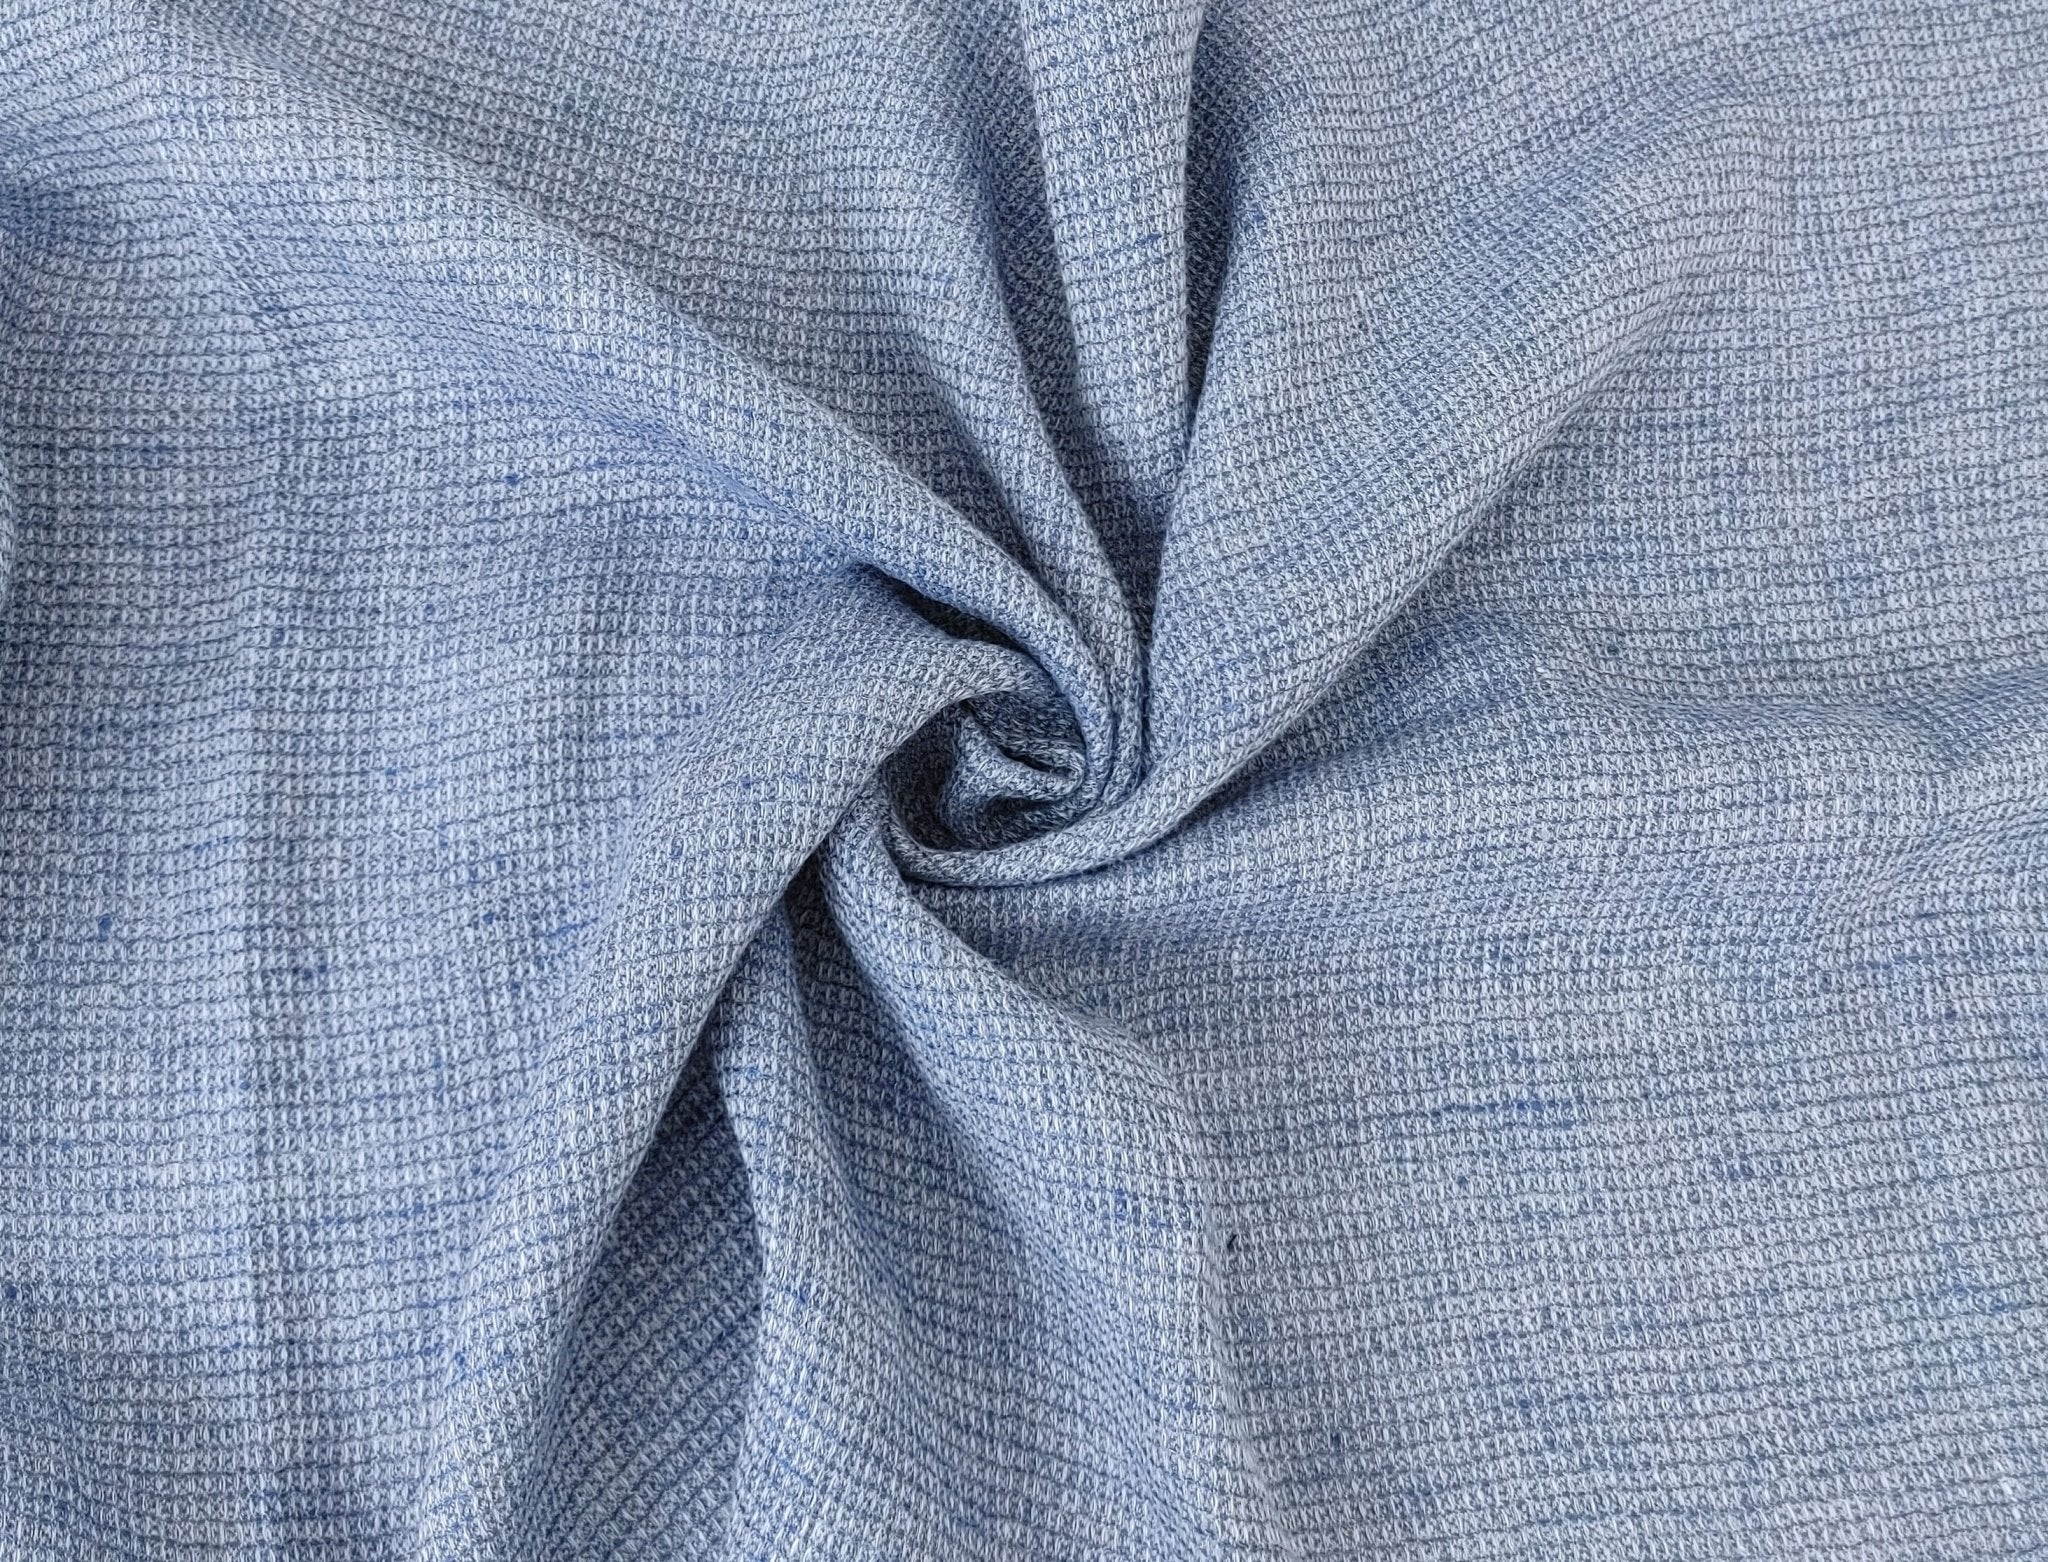 Cloud 9 100% Linen Waffle Tweed Fabric 7876 7877 7878 7879 7880 - The Linen Lab - Blue(Light)